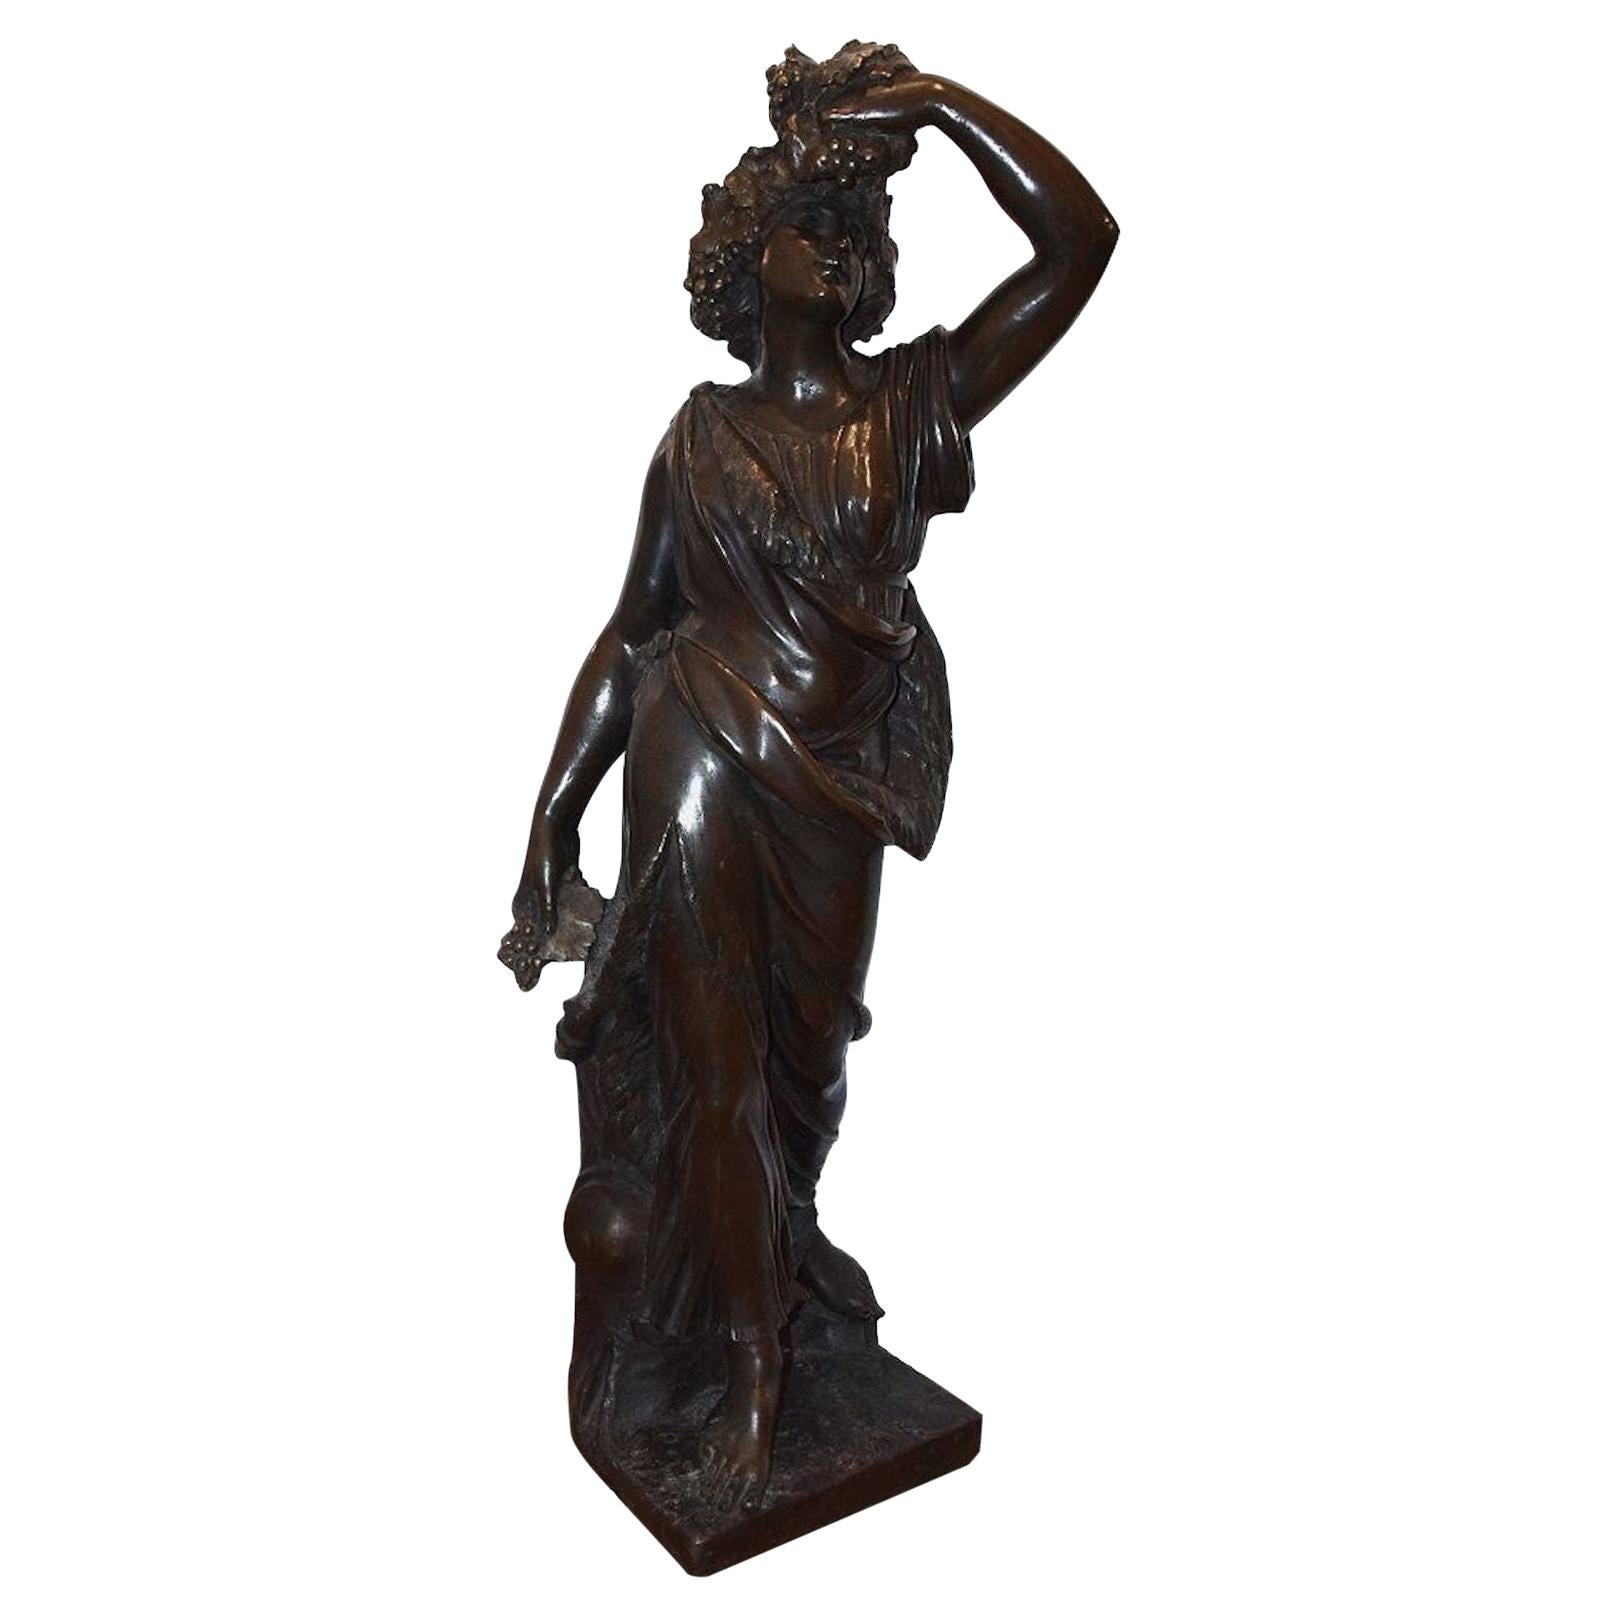 Follower of Bacchus, Original Bronze Sculpture by Italian Master End of 1800